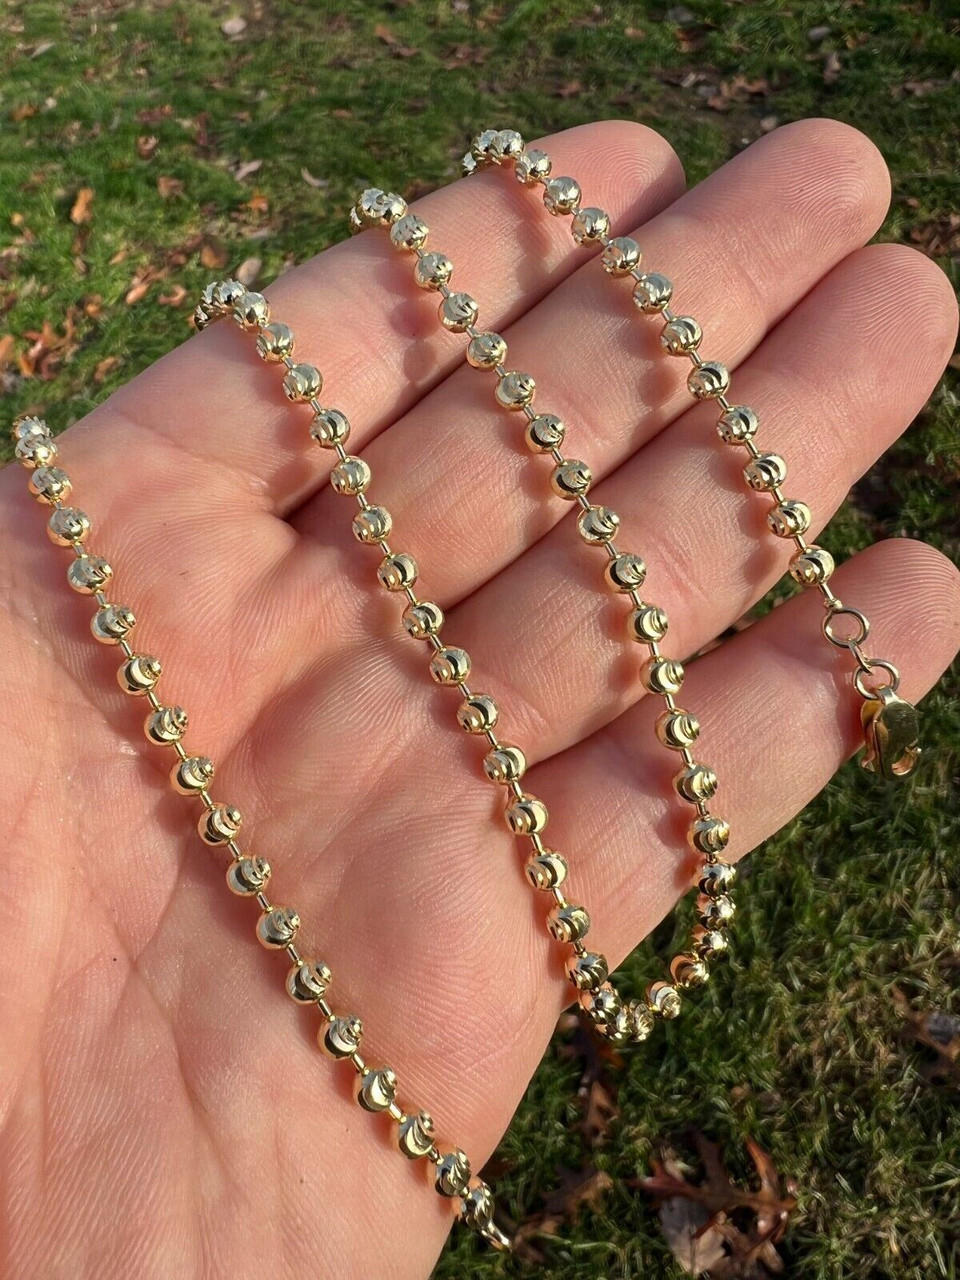 14k Yellow Gold Diamond Cut Beaded Chain Necklace